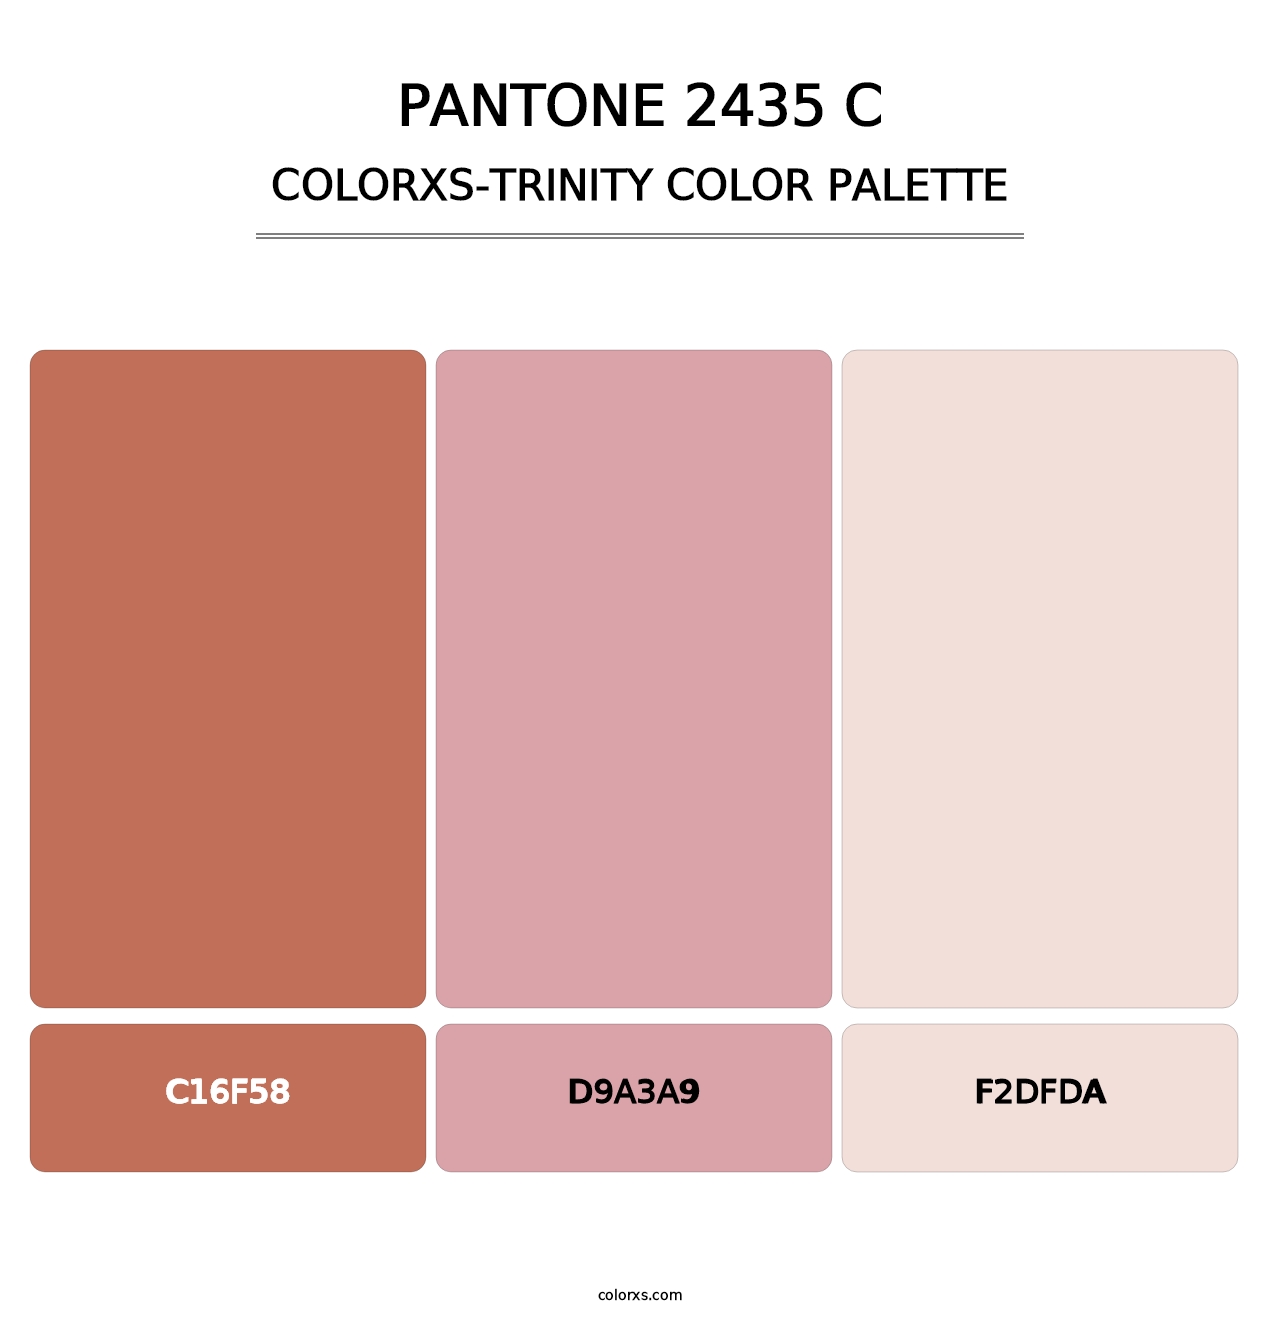 PANTONE 2435 C - Colorxs Trinity Palette